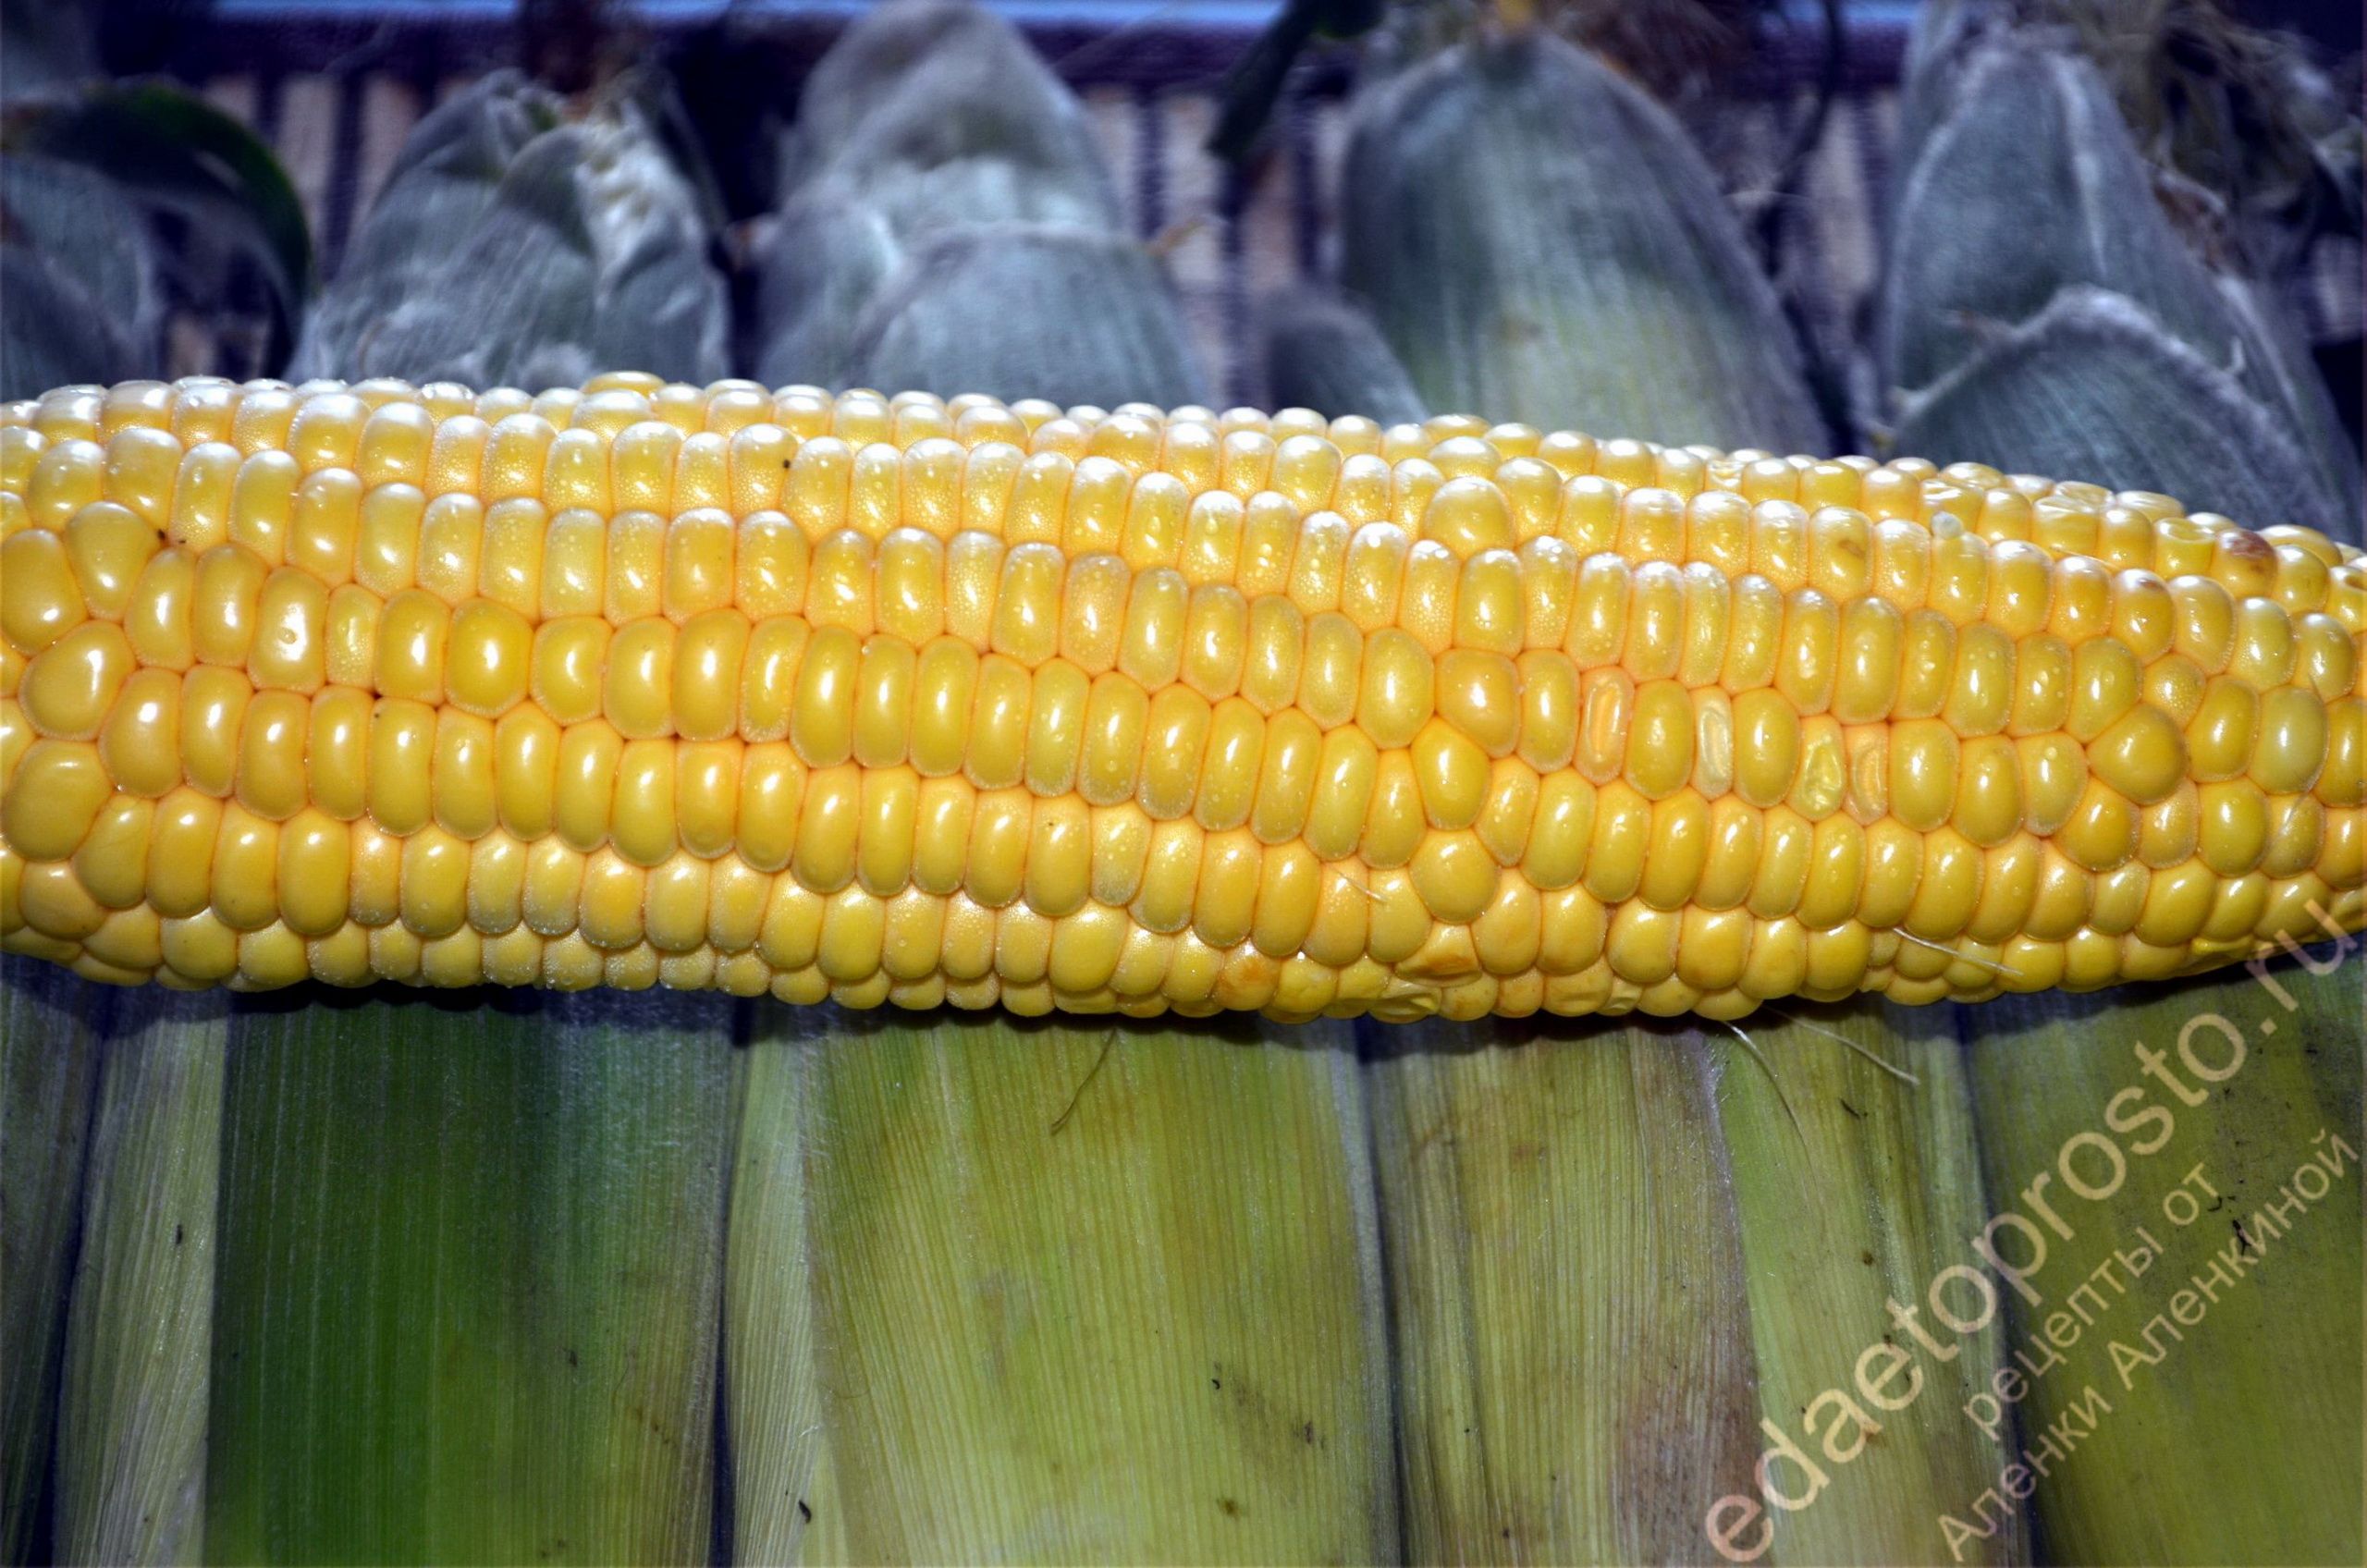 красивое фото початка кукурузы